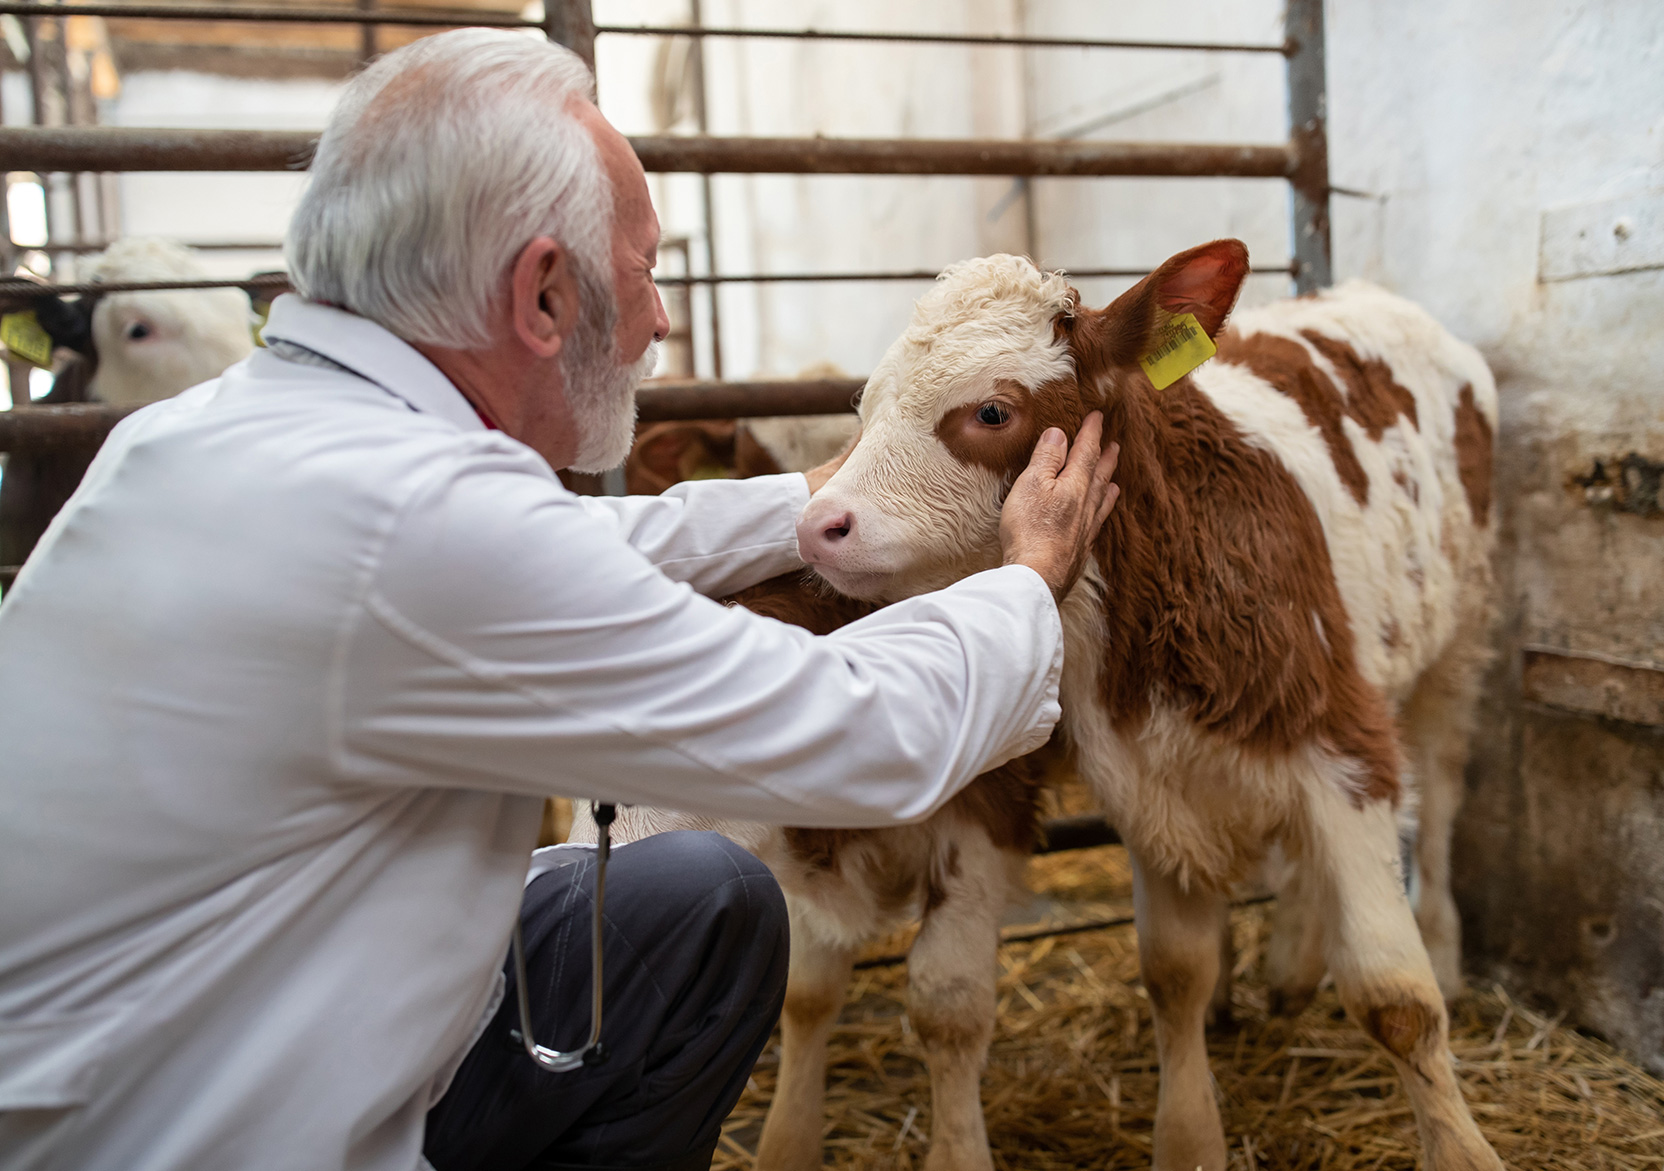 A veterinarian examining a calf in a stable